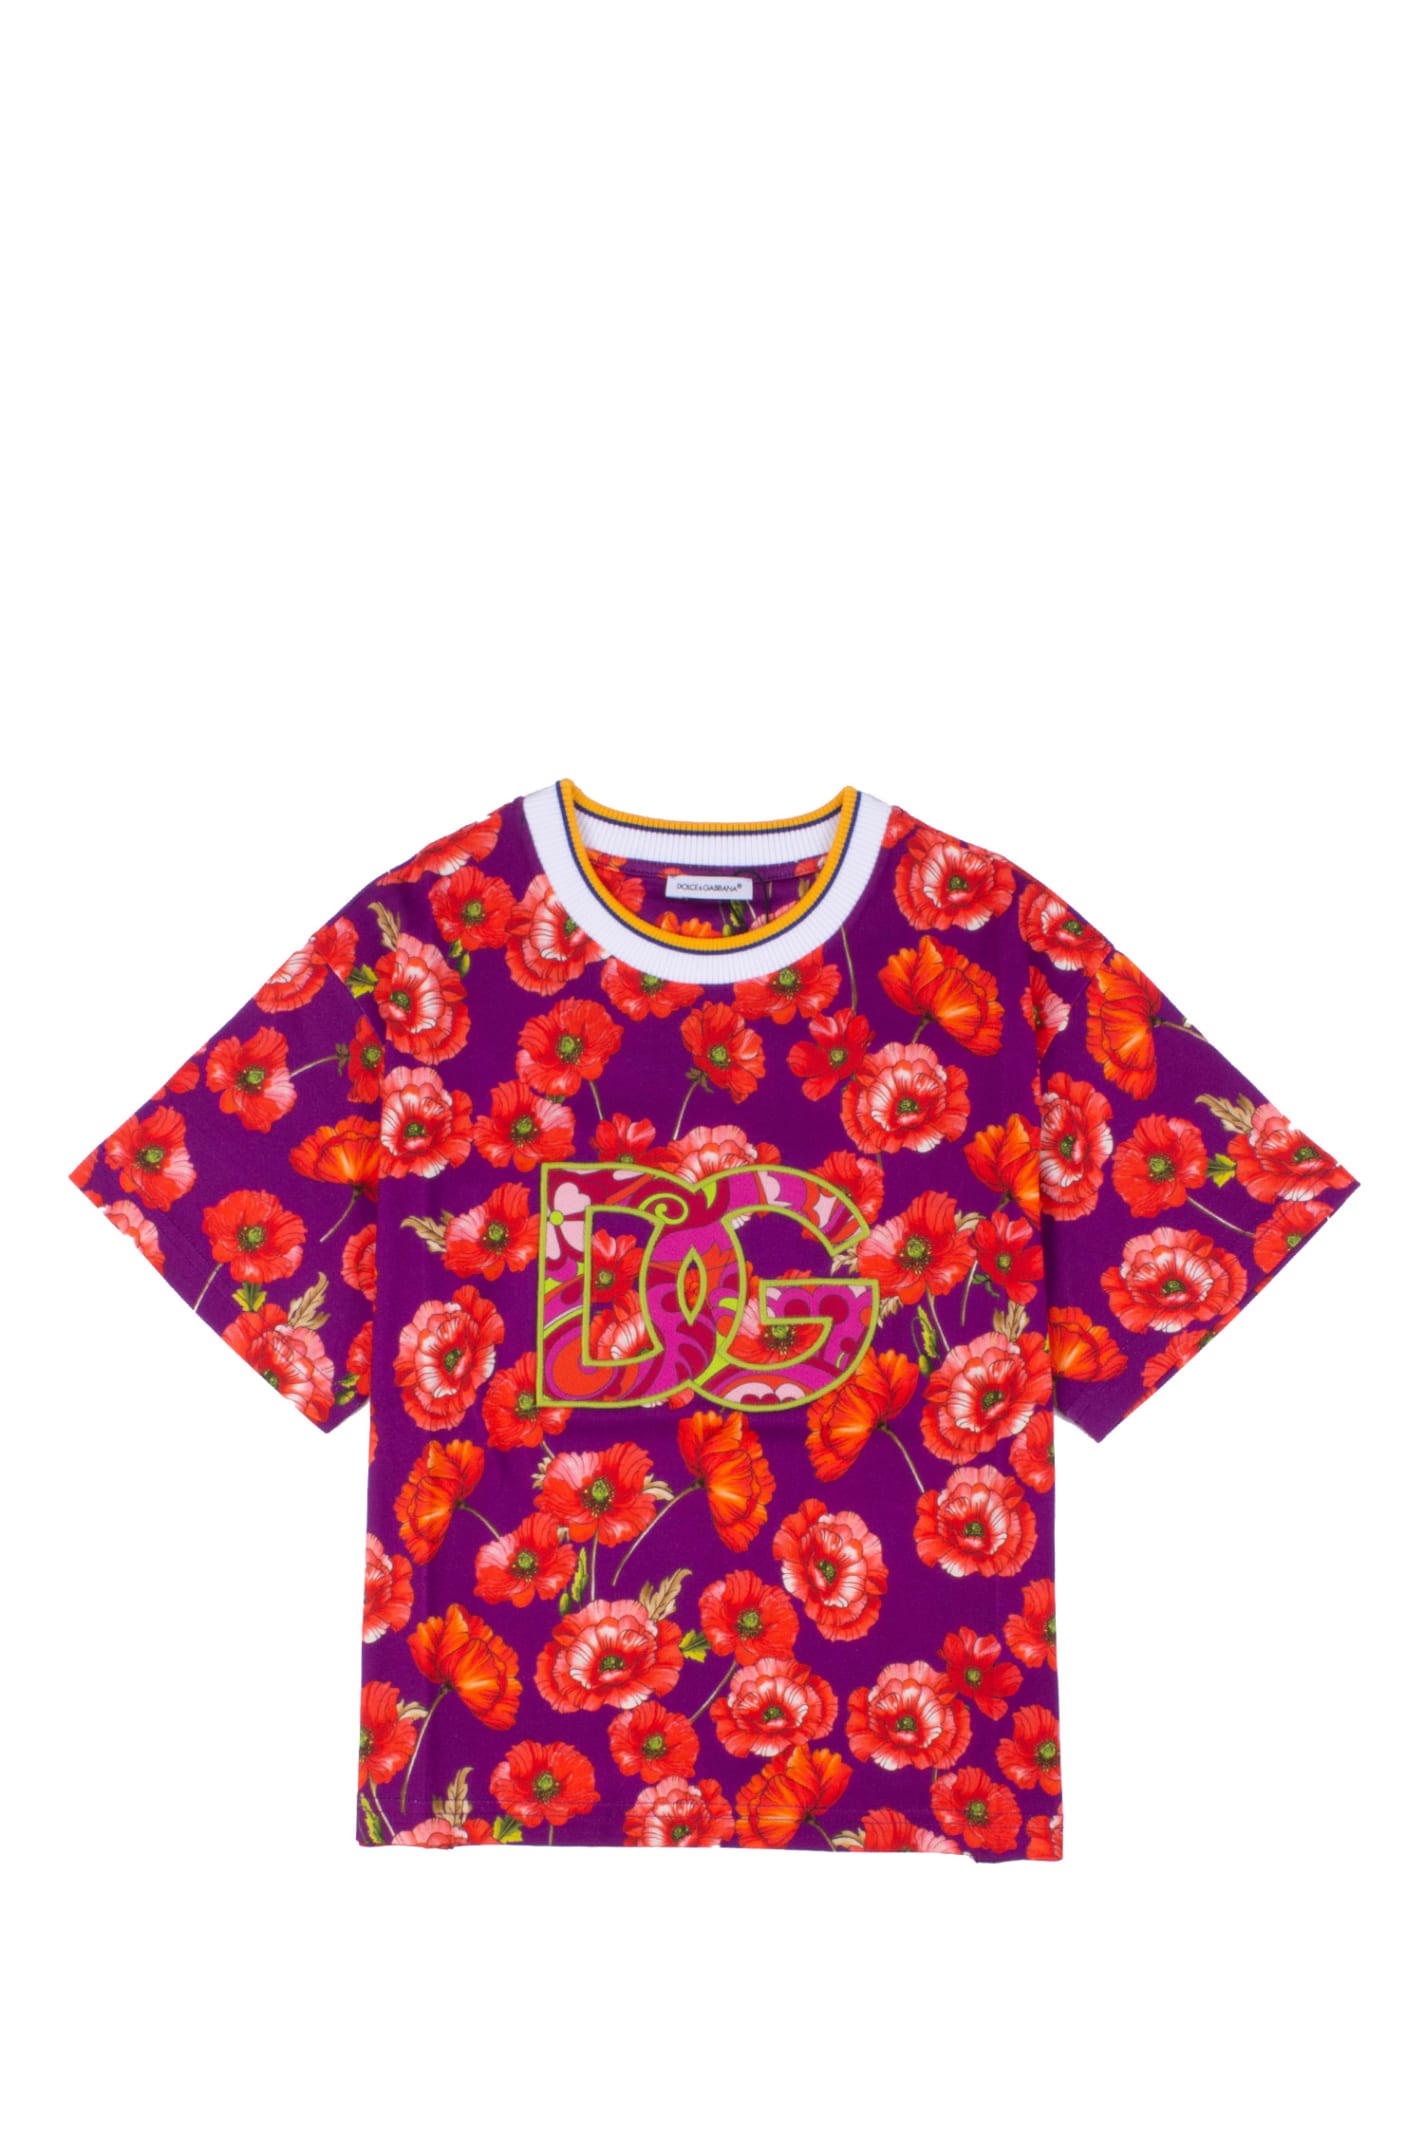 Dolce & Gabbana Babies' Logo Floral Cotton T-shirt In Multicolor